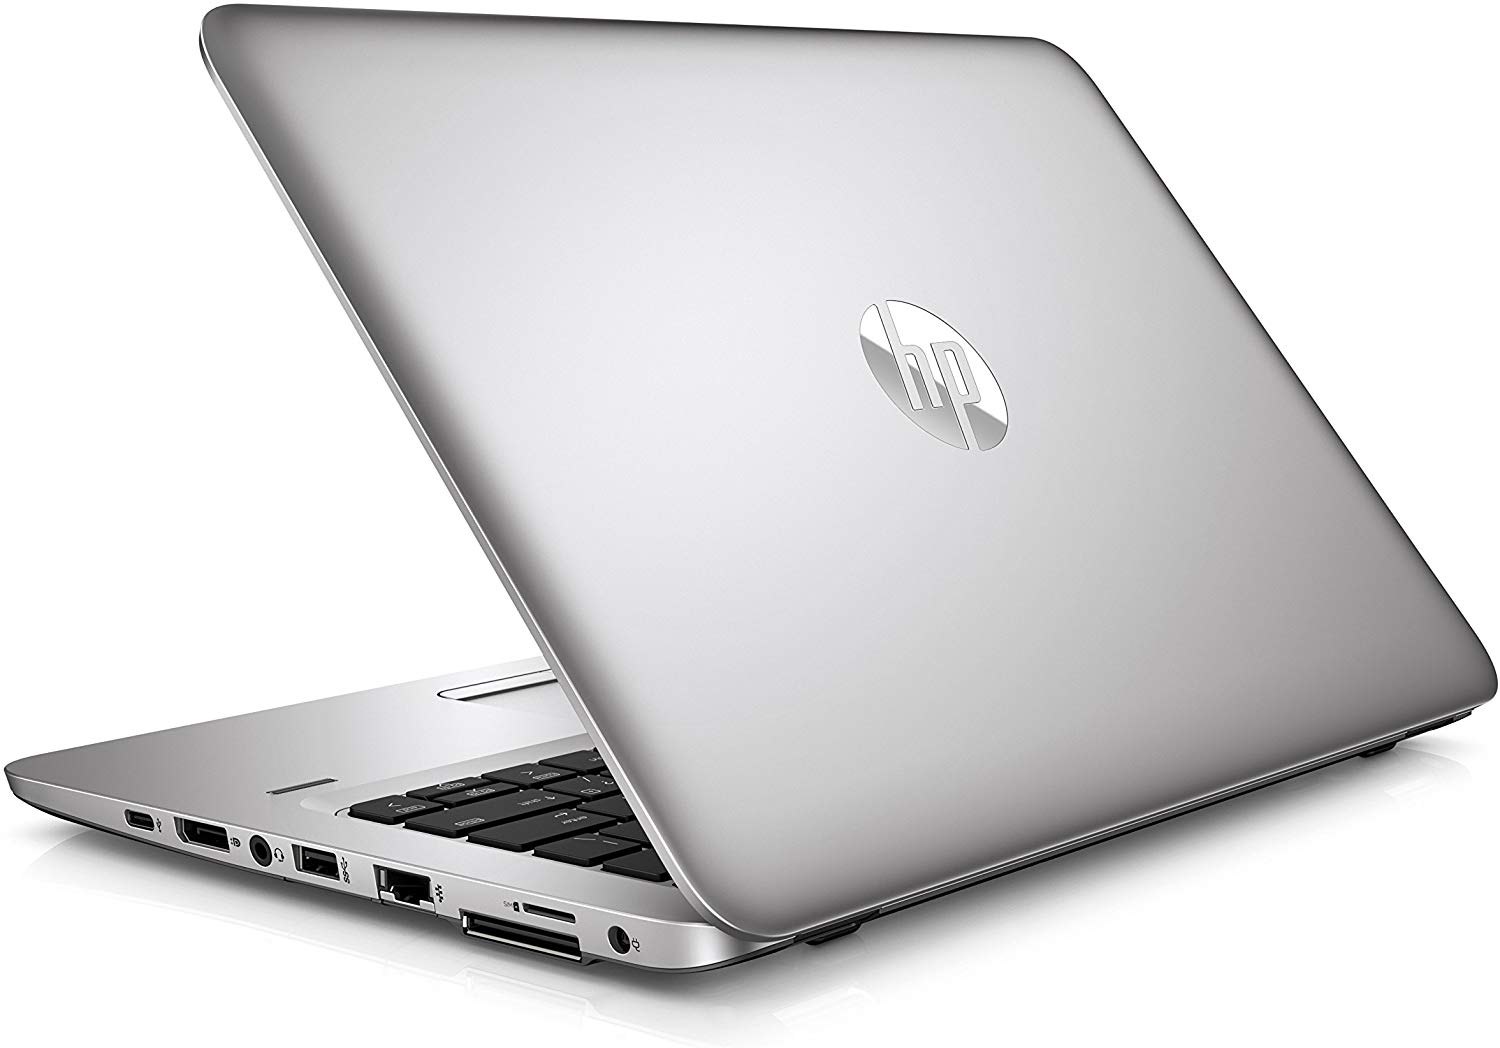 HP EliteBook 820 G3 NOTEBOOK INTEL CORE I5 6300 8GB DDR 4 256GB SSD WINDOWS 10 PRO